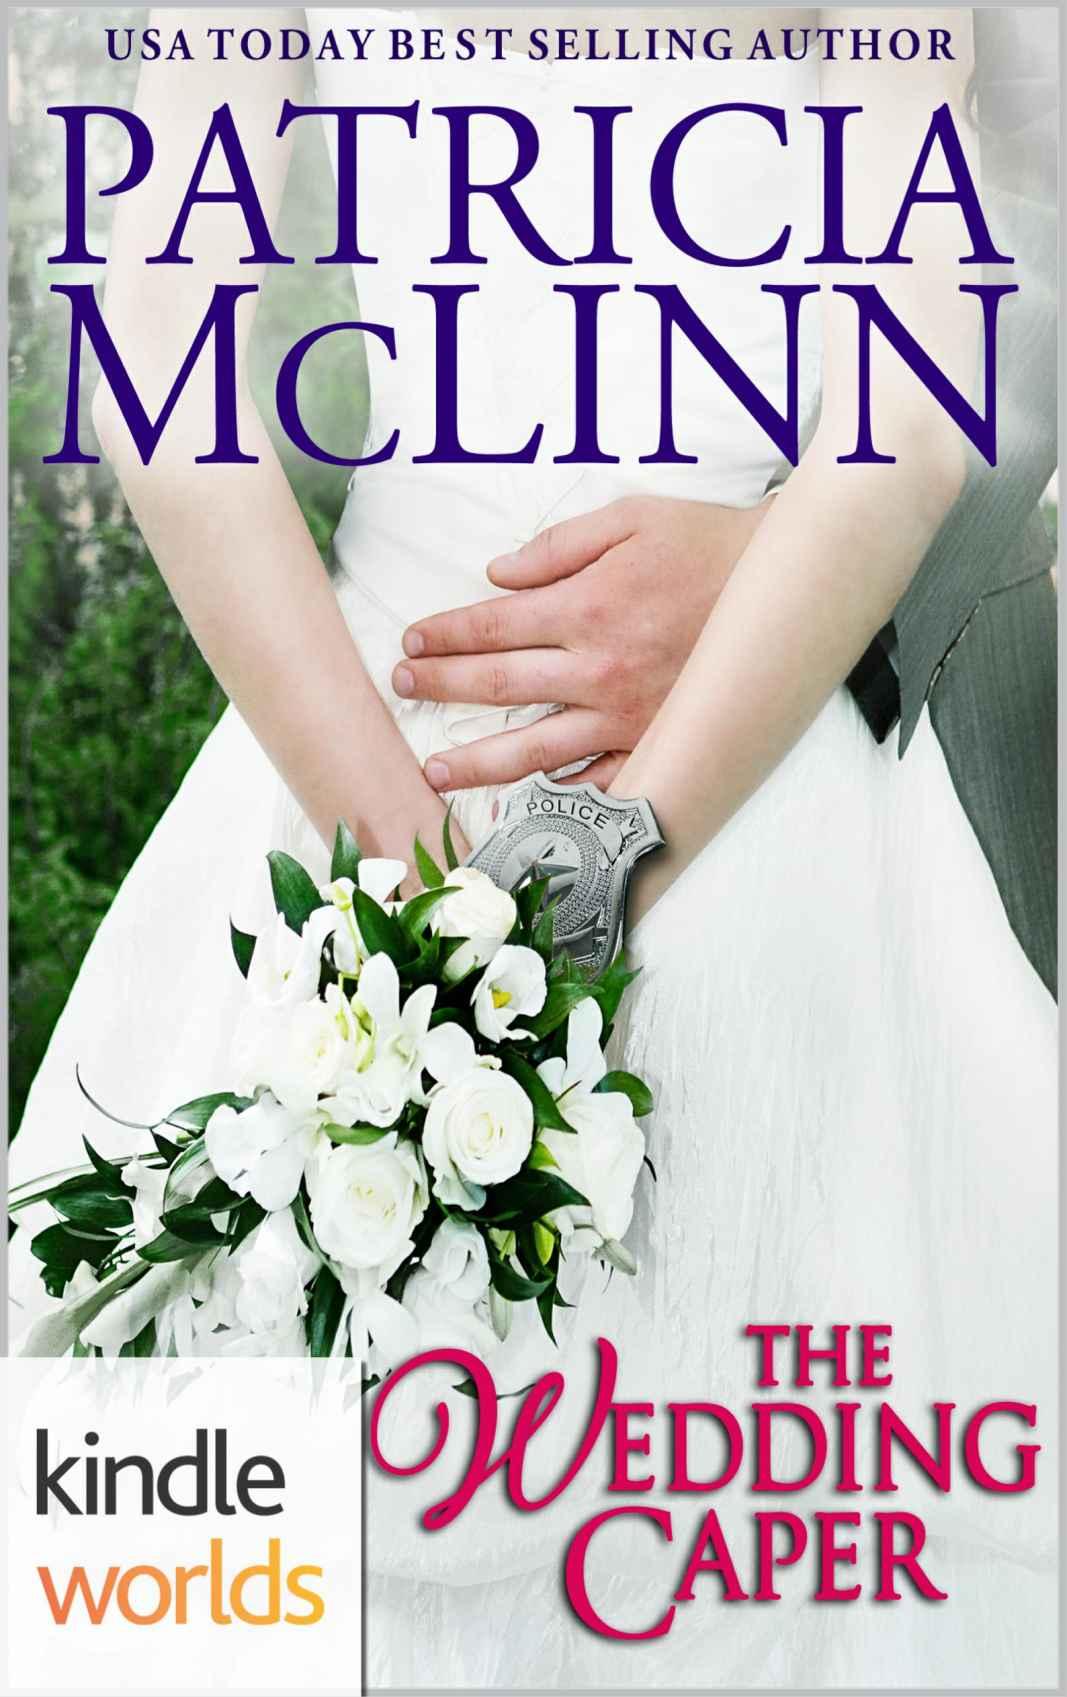 Four Weddings and a Fiasco: The Wedding Caper by Patricia McLinn